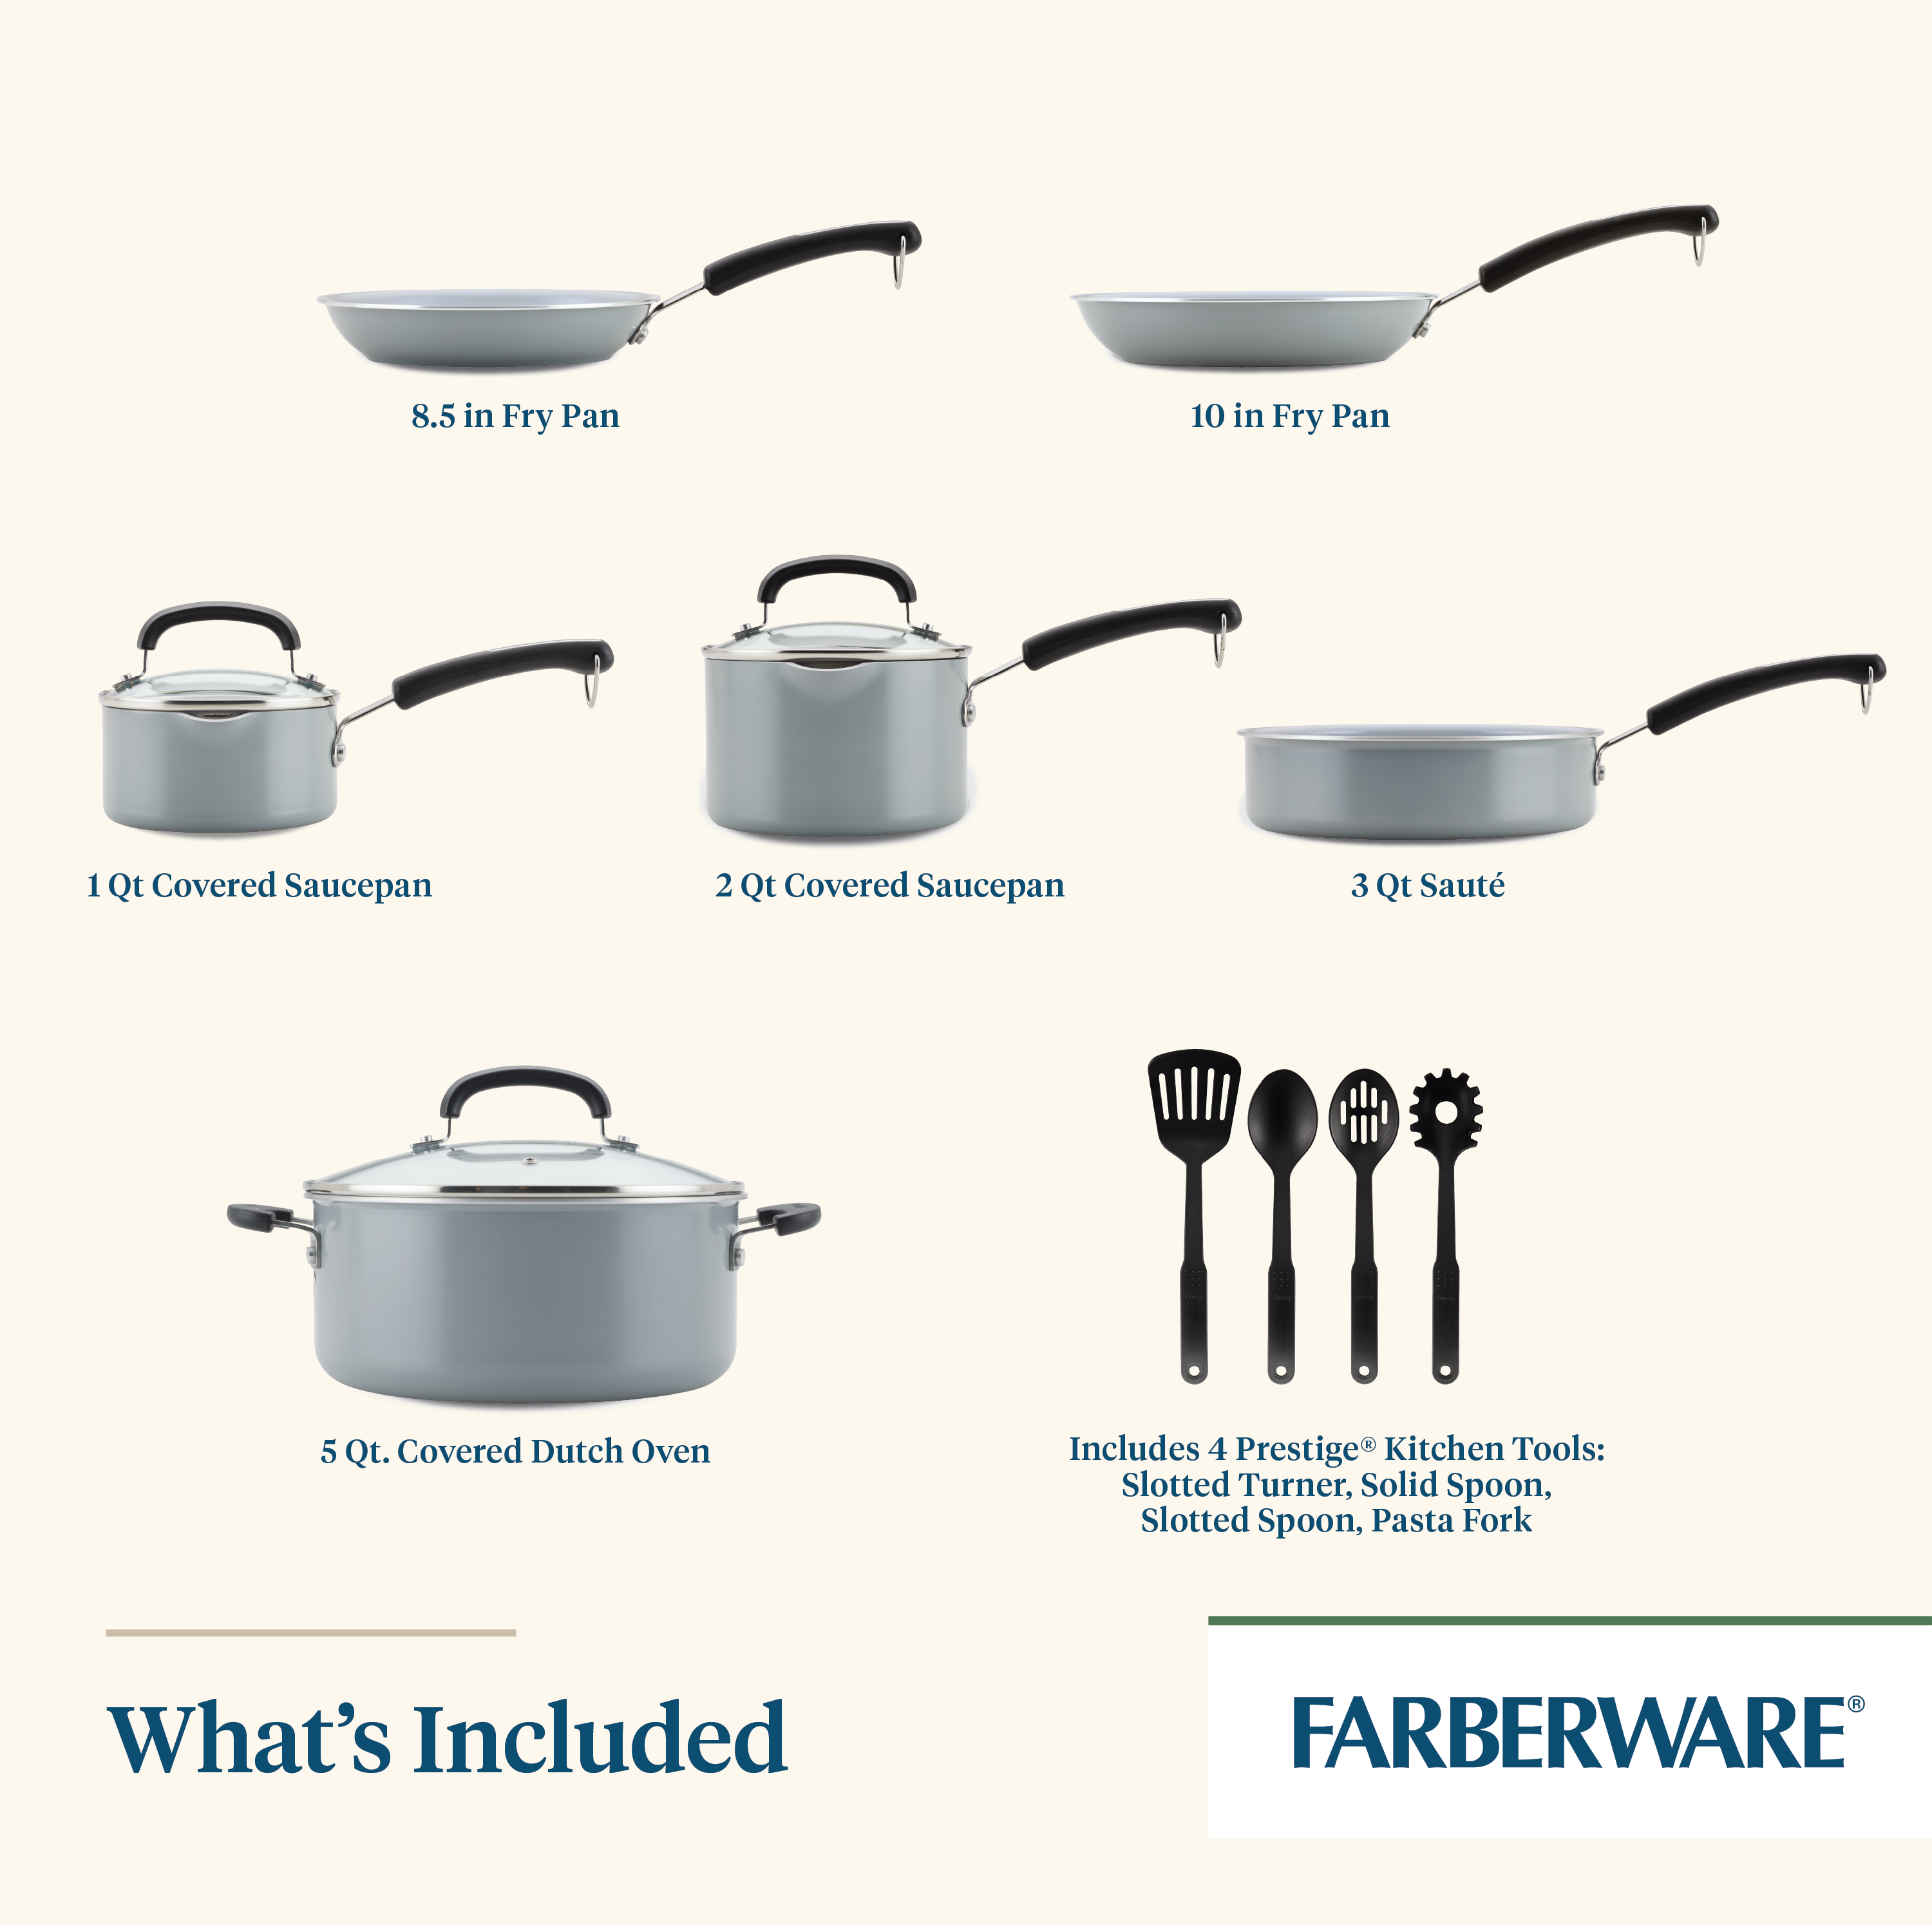 Farberware Stainless Steel Ceramic Frying Pan - 12.5 in